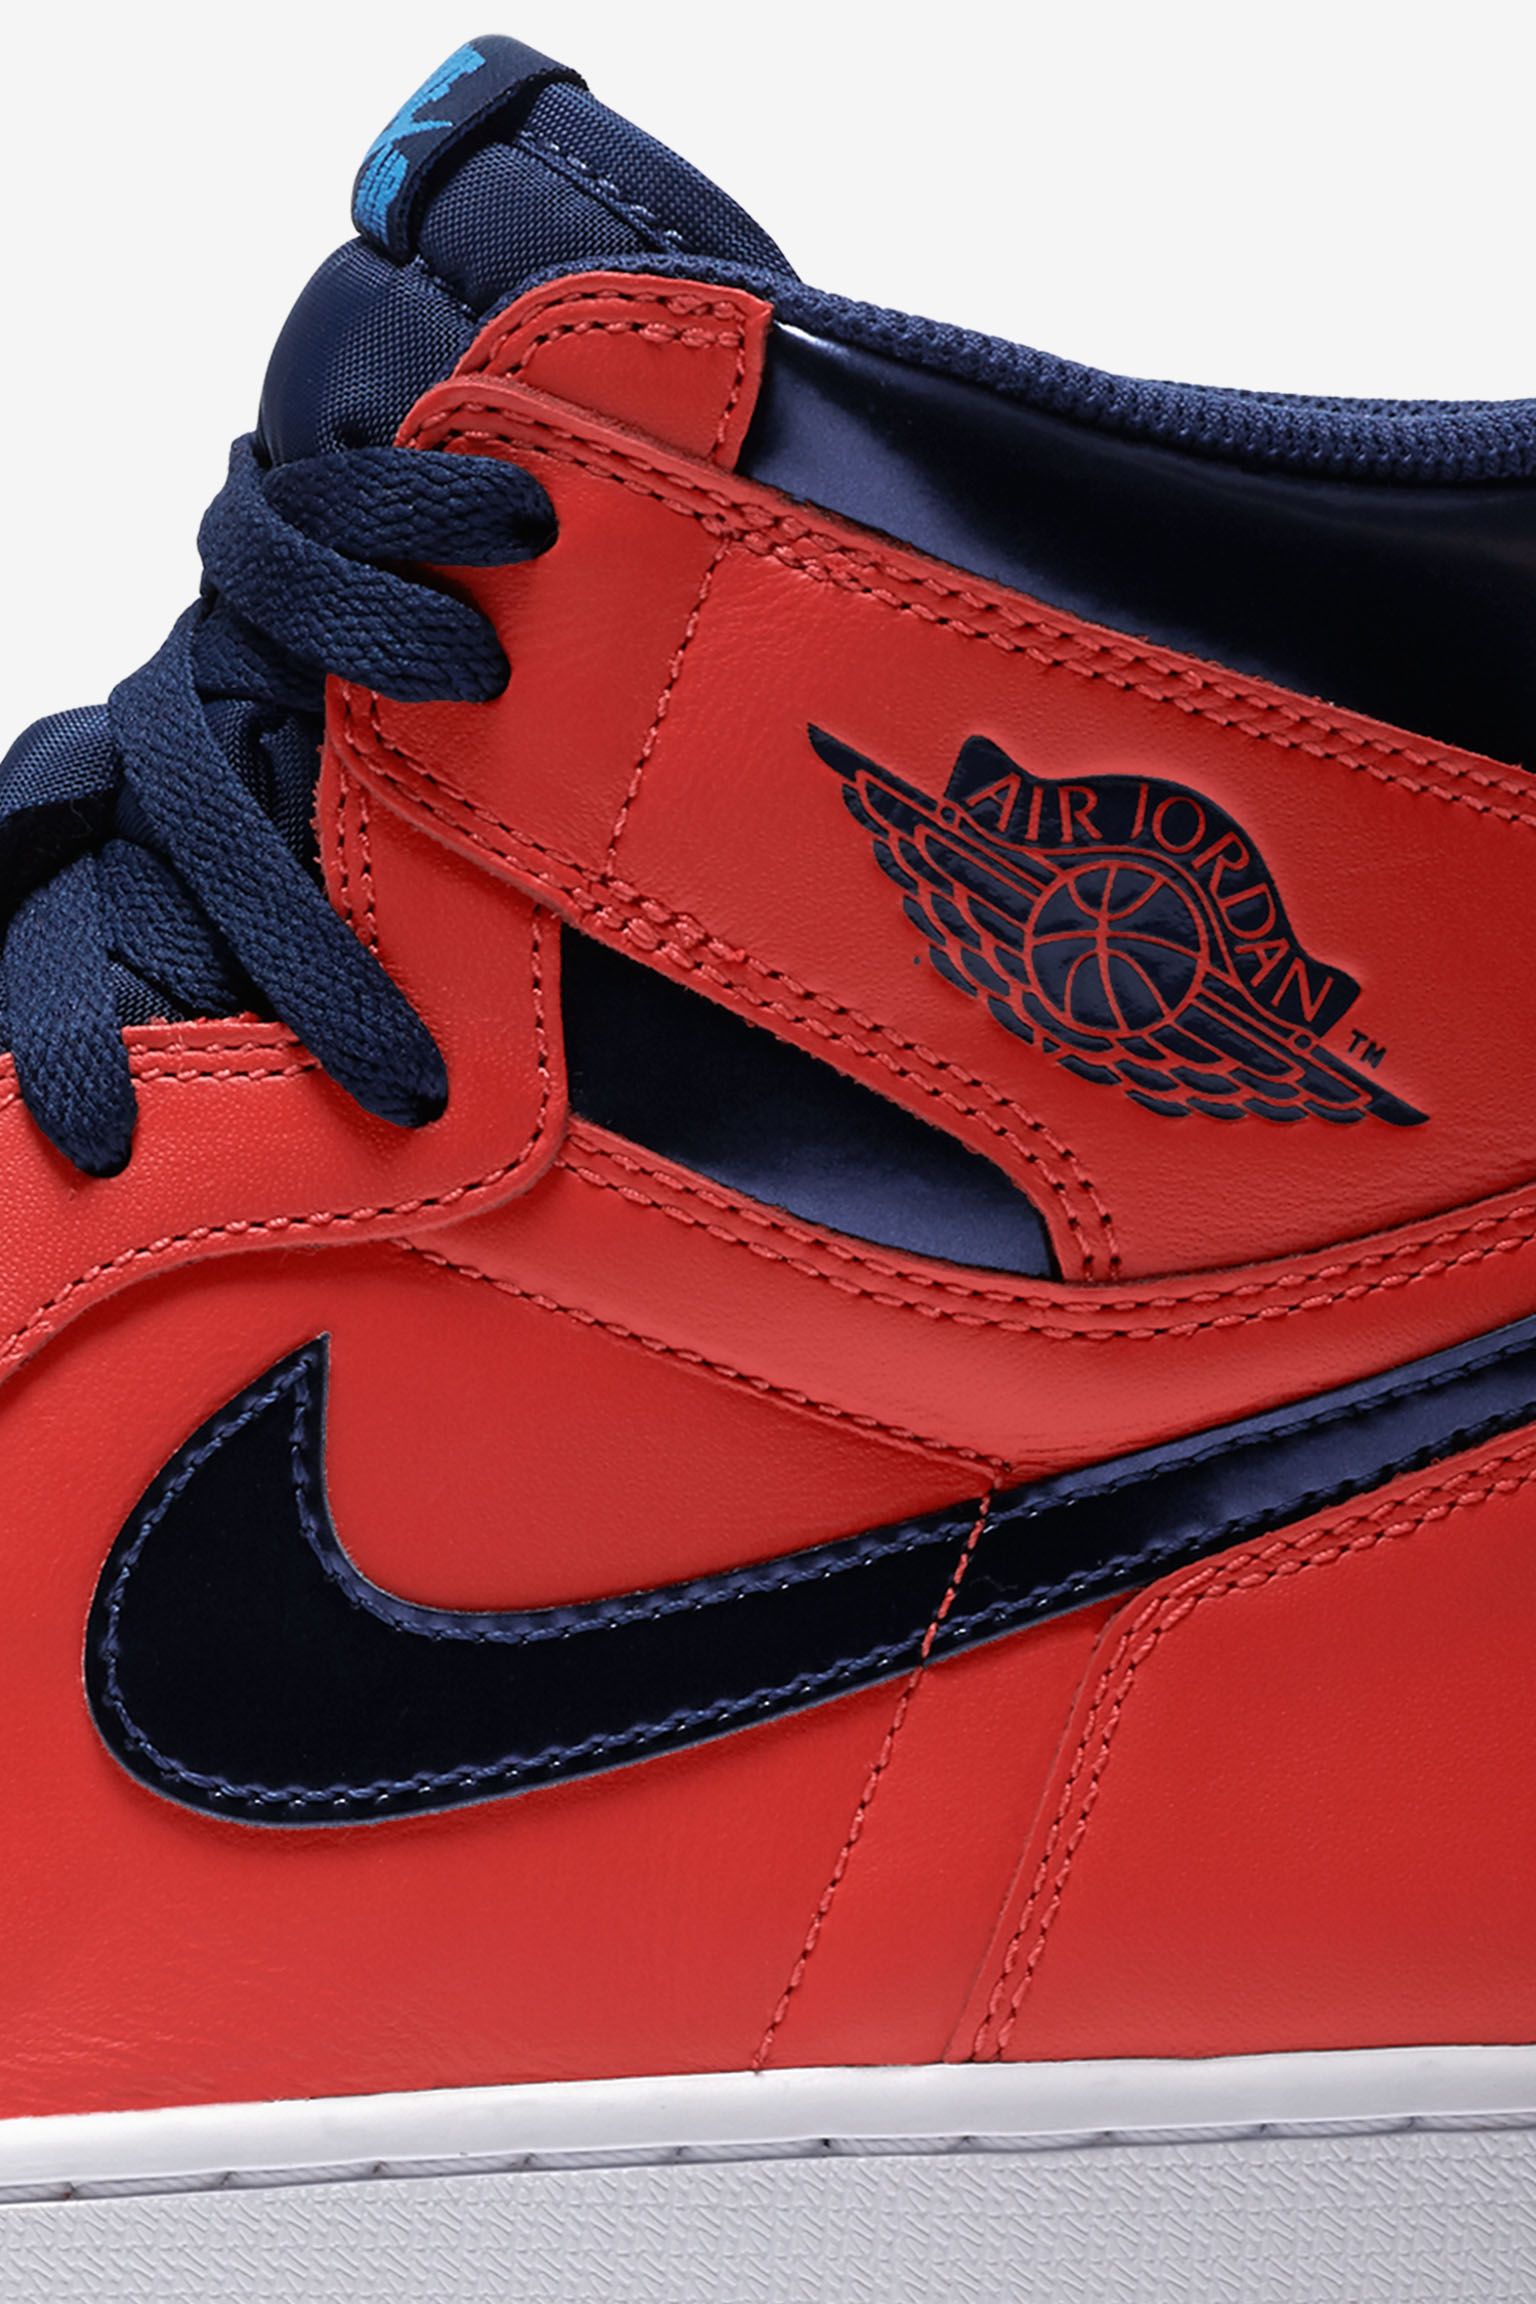 Air Jordan 1 'On Air' Release Date. Nike SNKRS